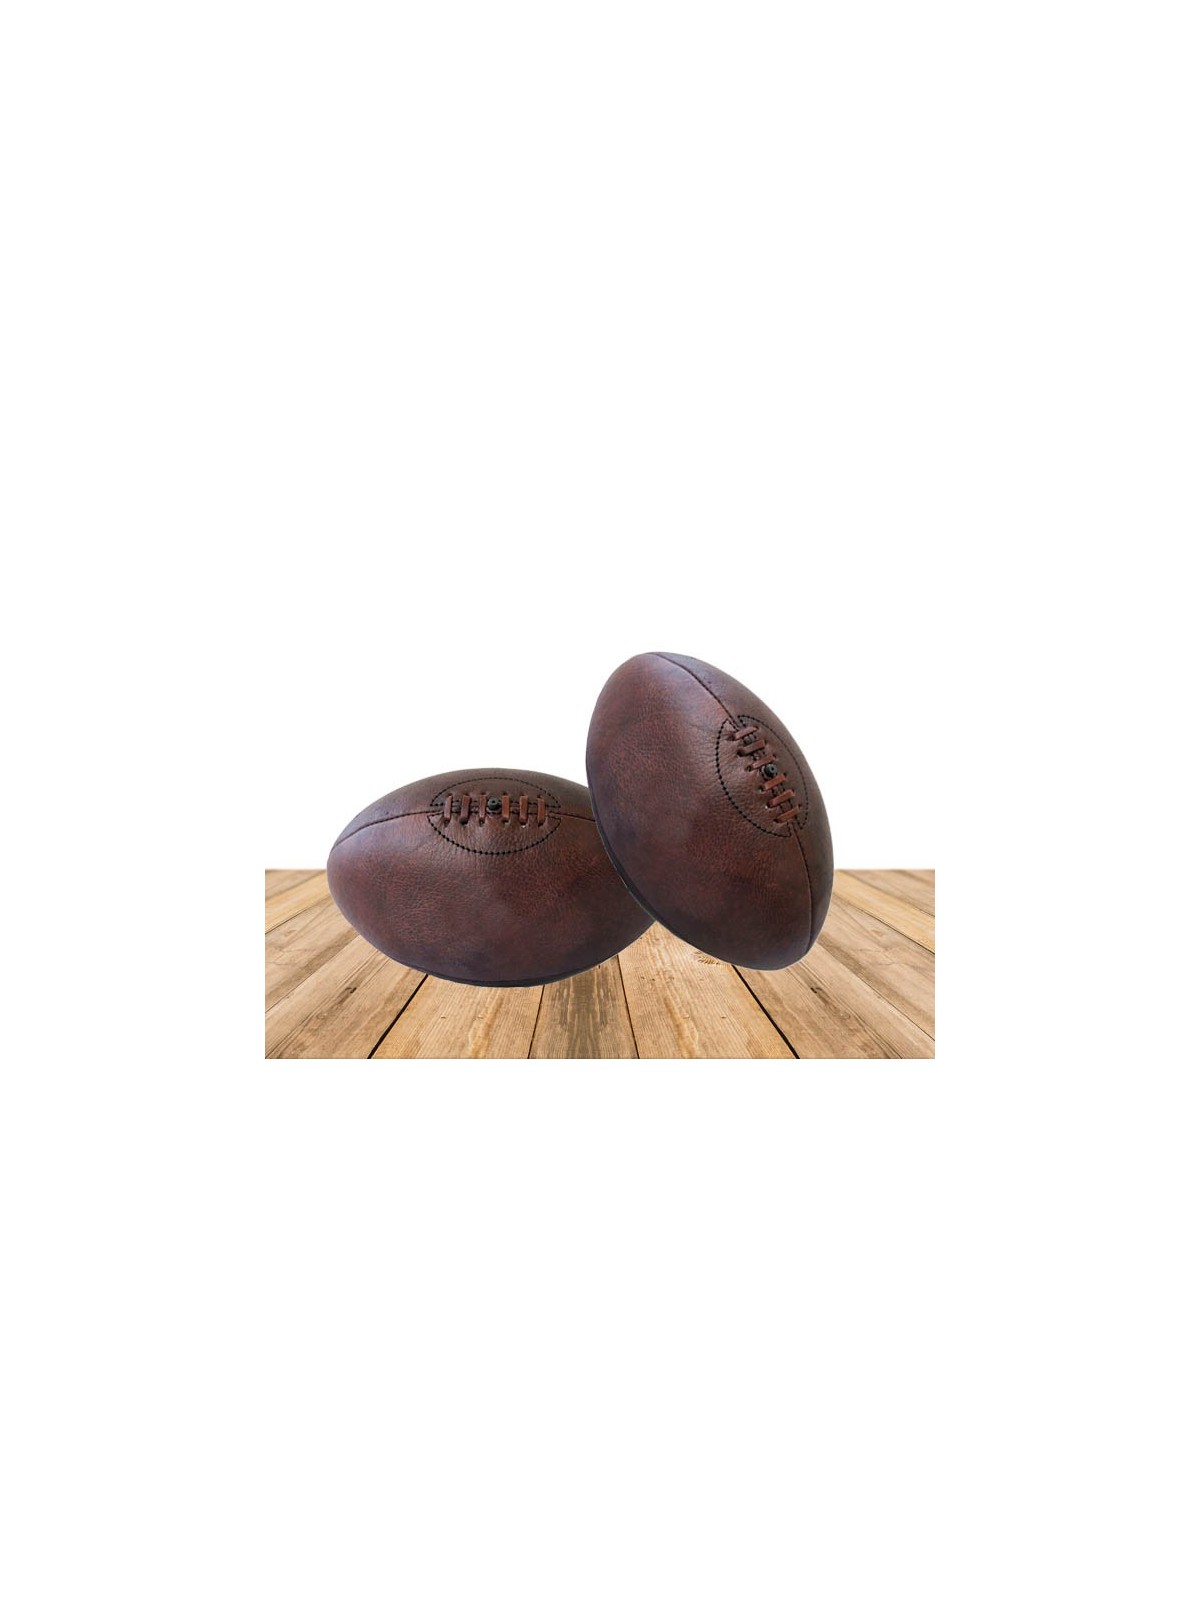 52-010 Mini ballon de rugby cuir véritable personnalisé